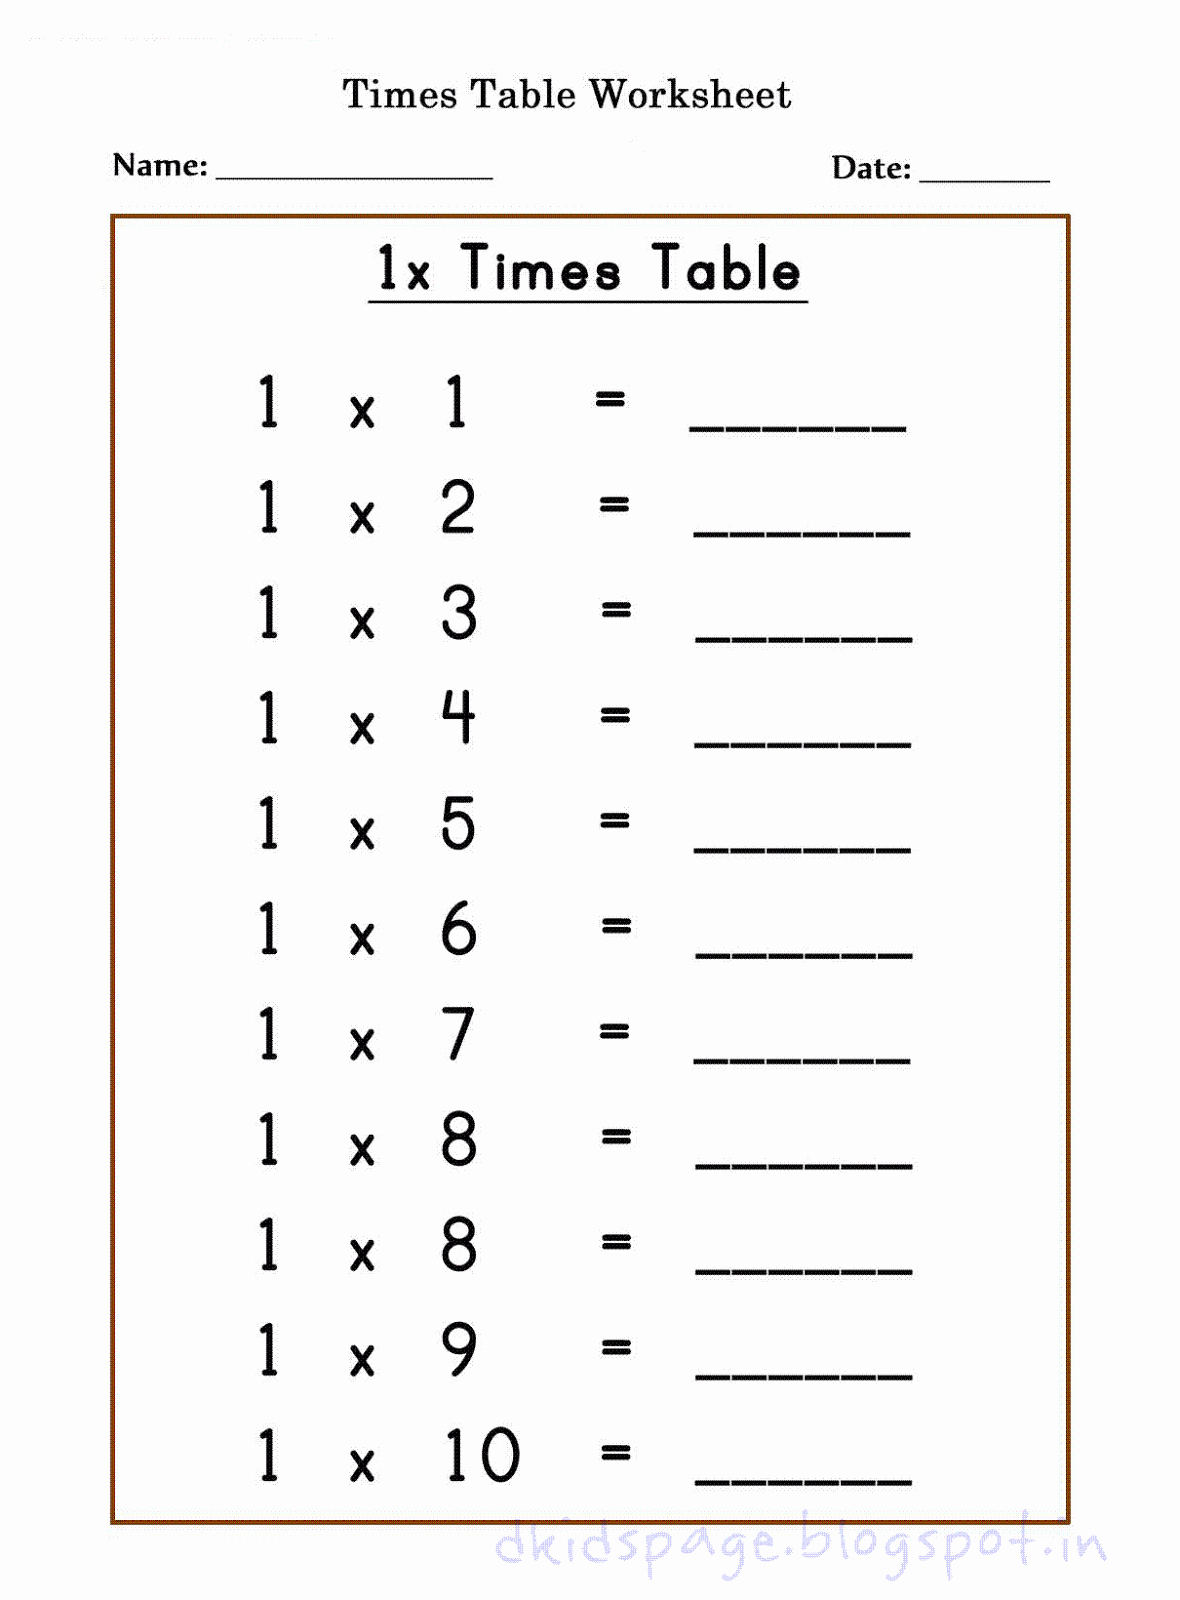 Free Printable Times Tables Worksheets Fresh Kids Page Printable 1 X Times Table Worksheets for Free